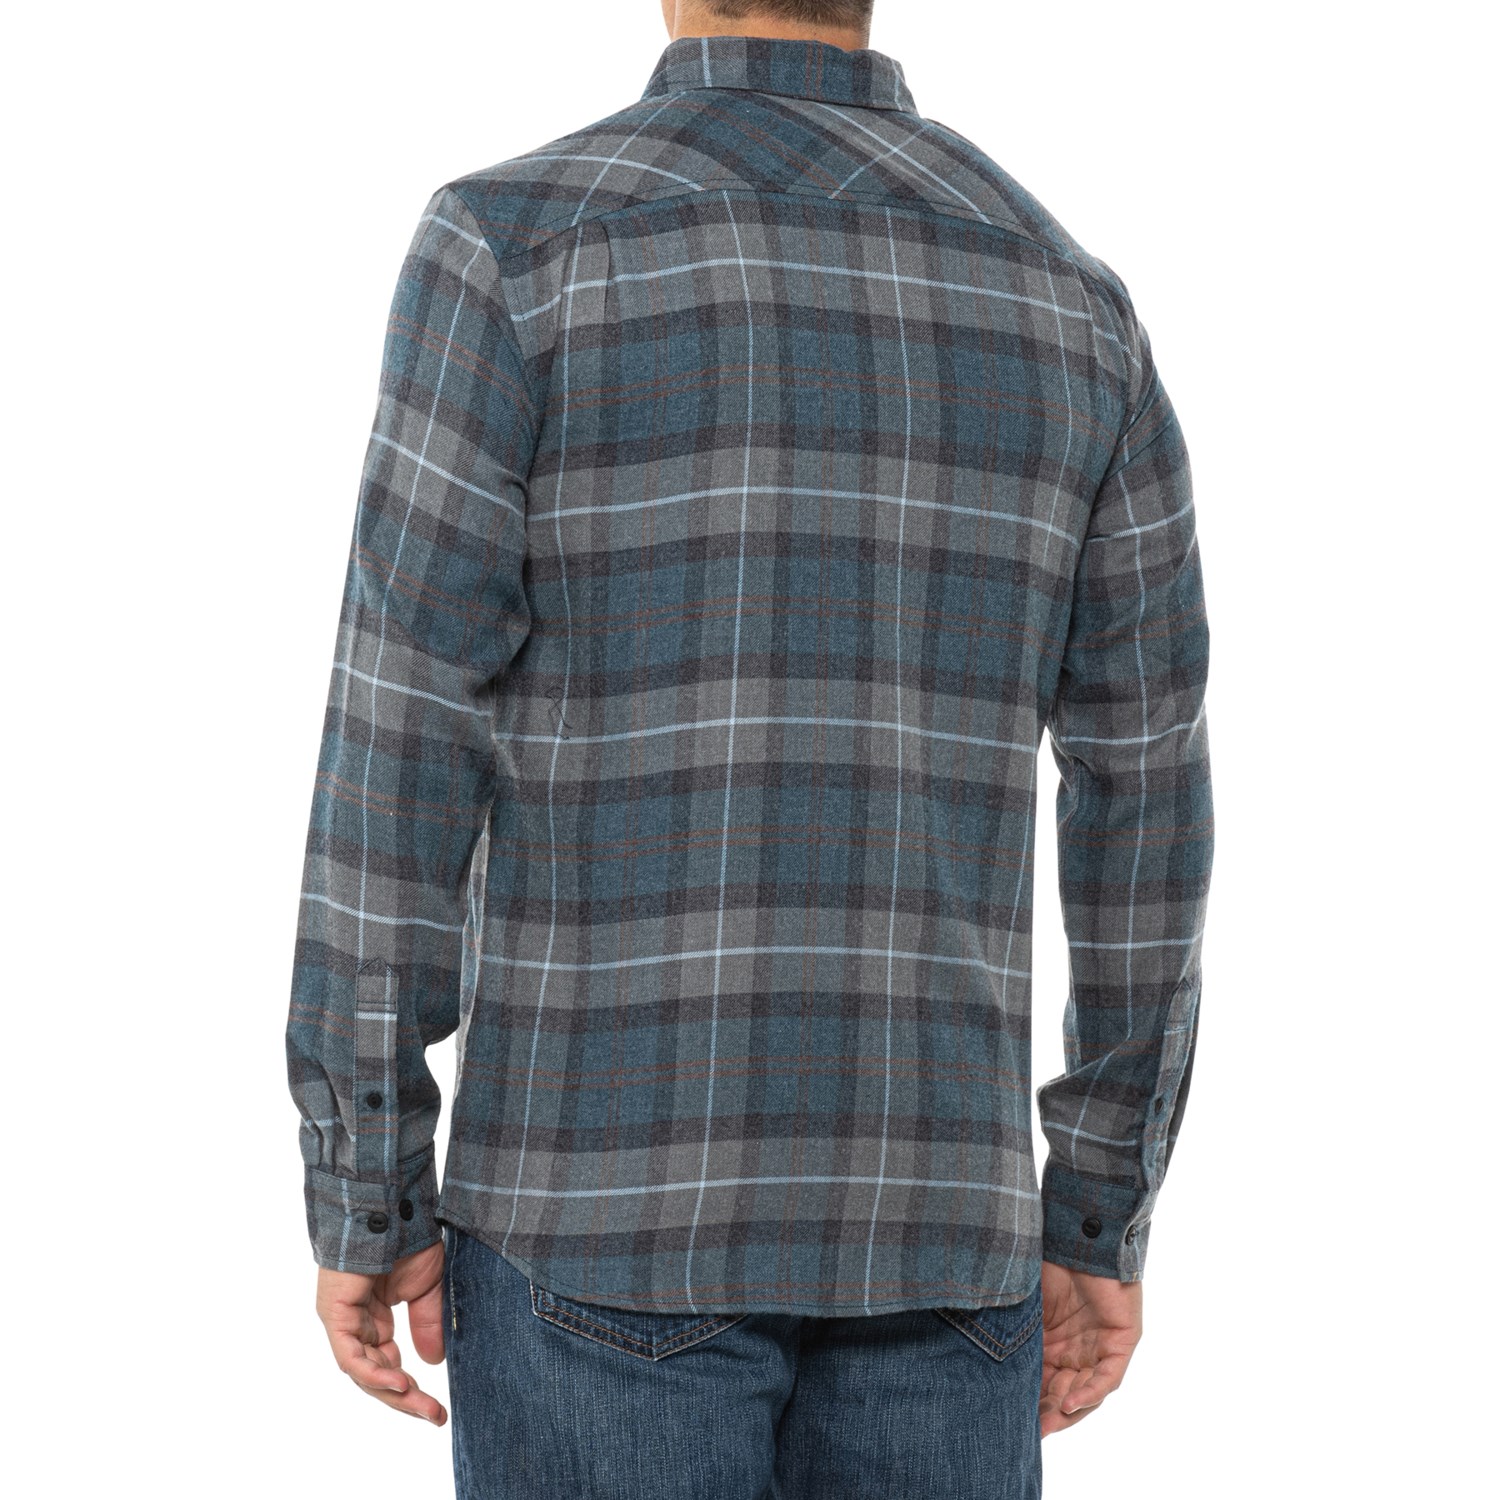 Weatherproof Vintage Luxe Flannel Shirt (For Men) - Save 68%